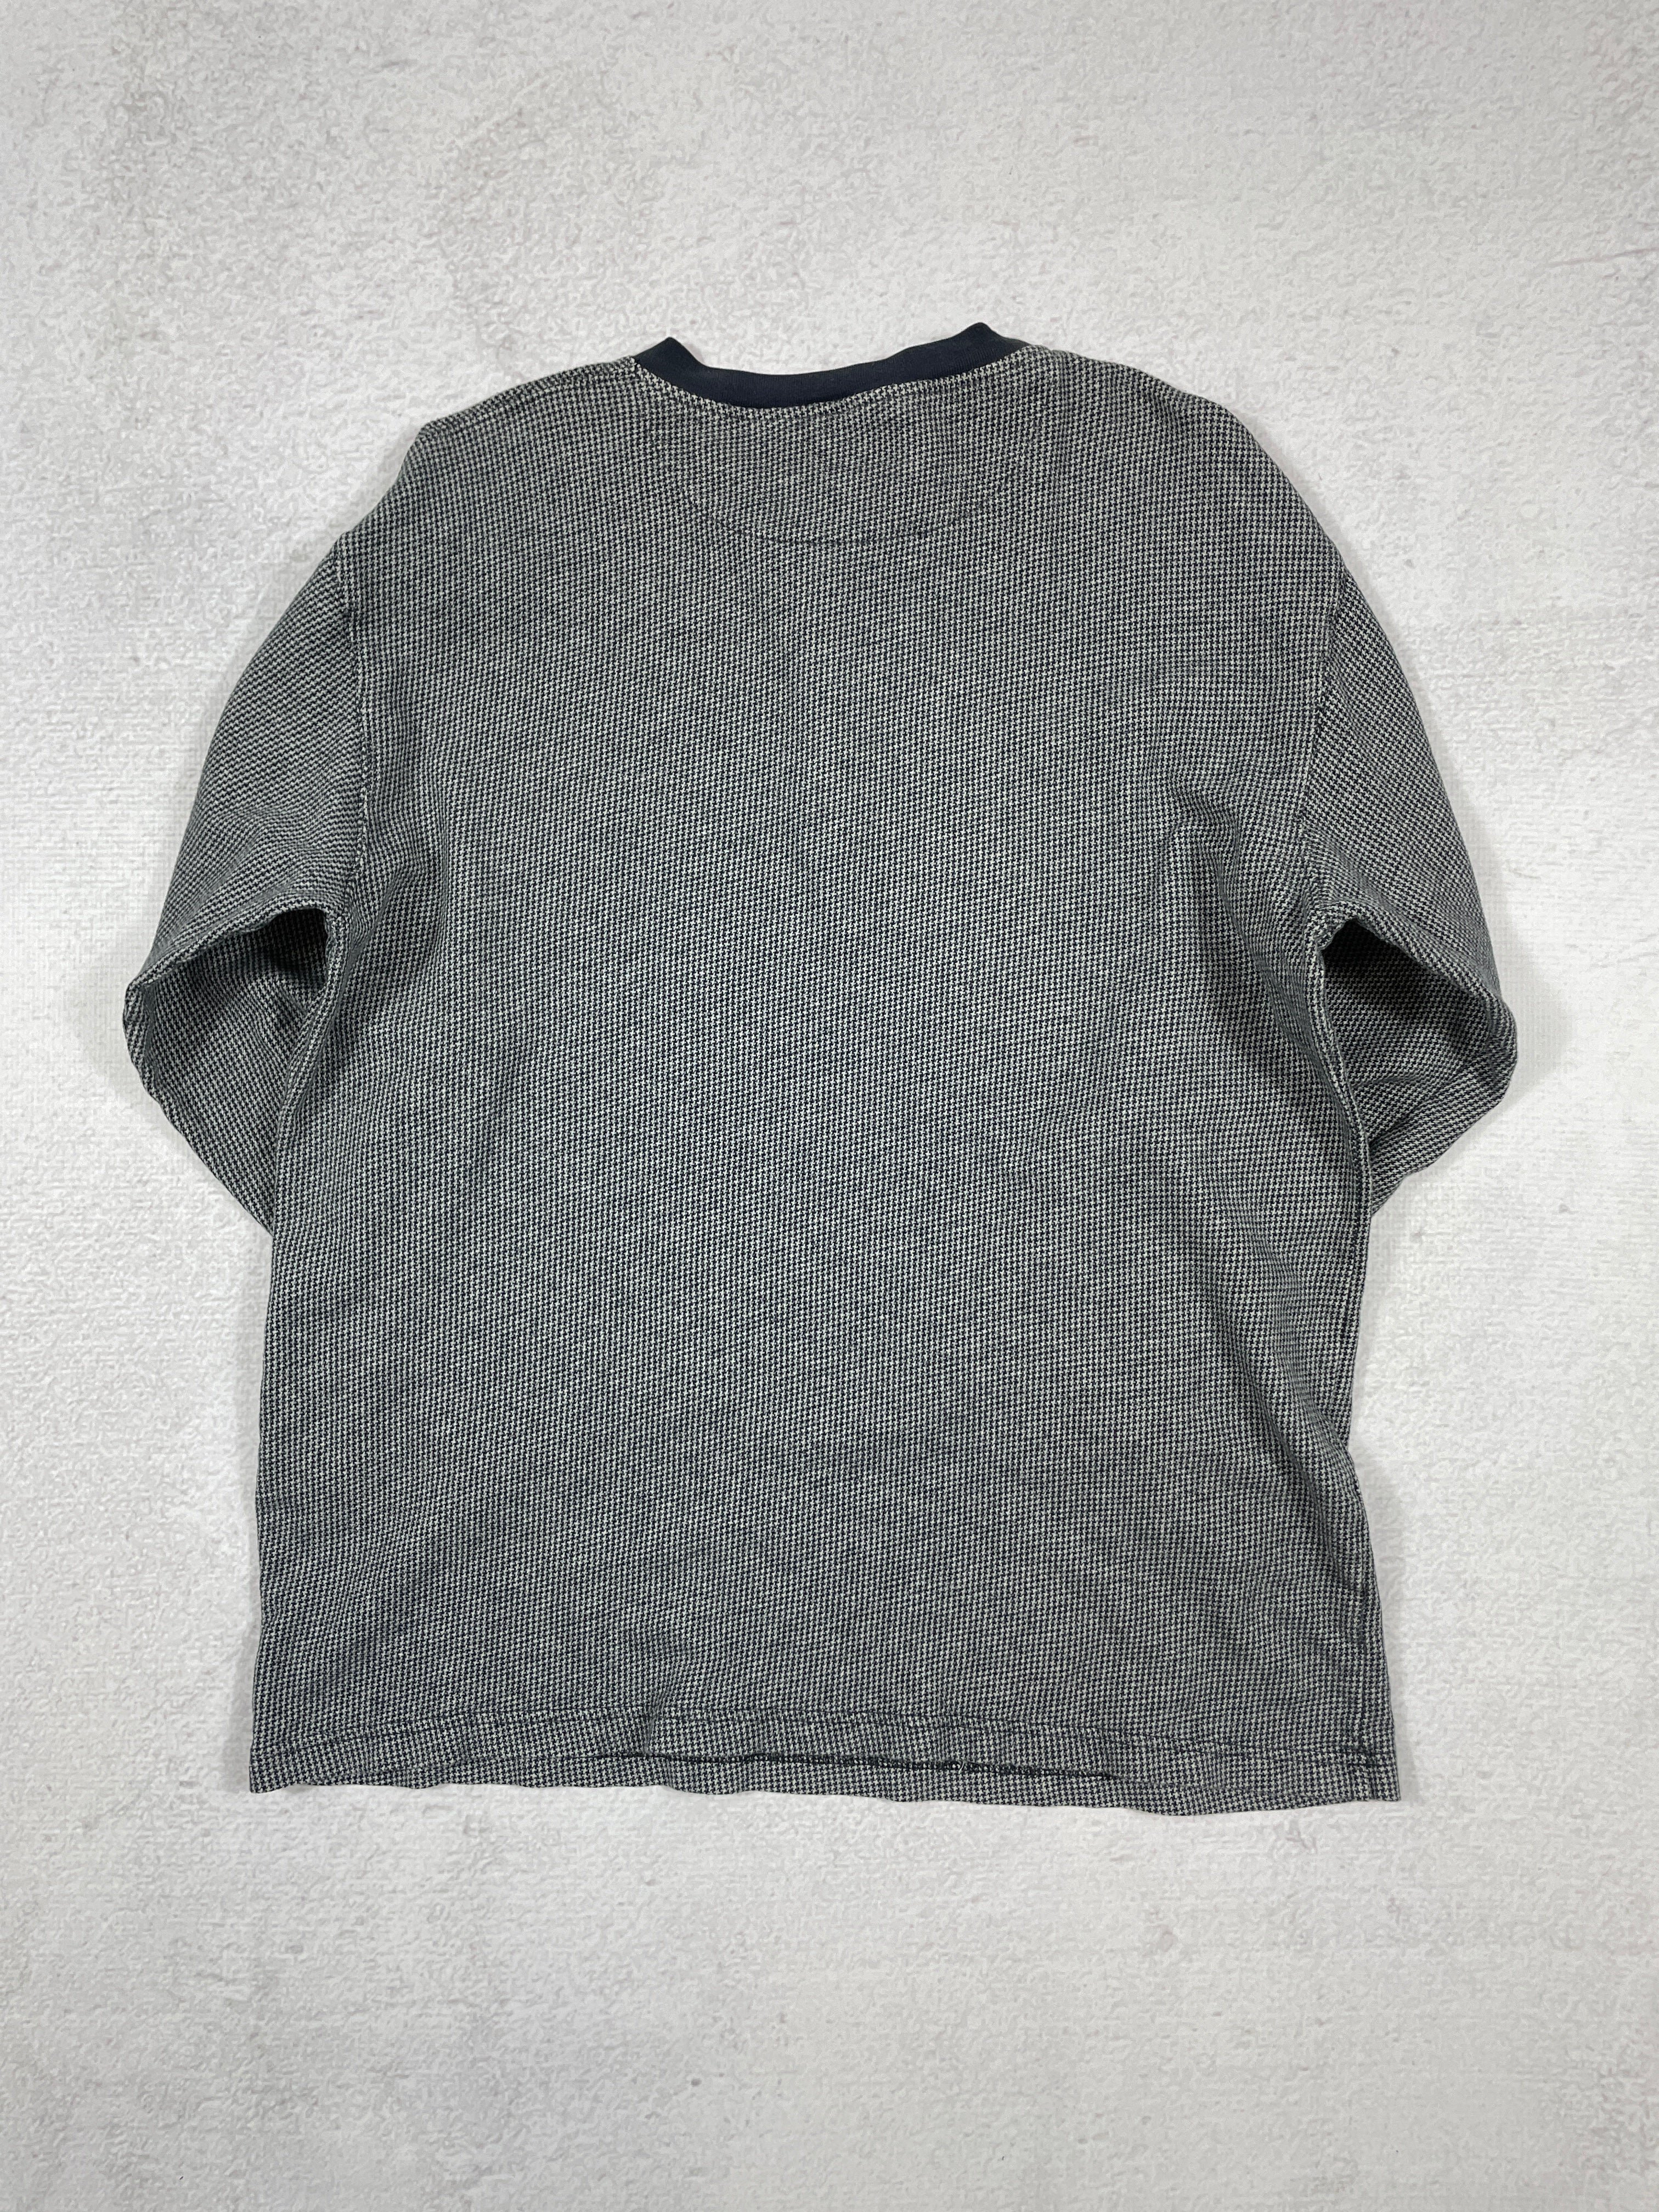 Vintage Nautica Long-Sleeve T-Shirt - Men's Large